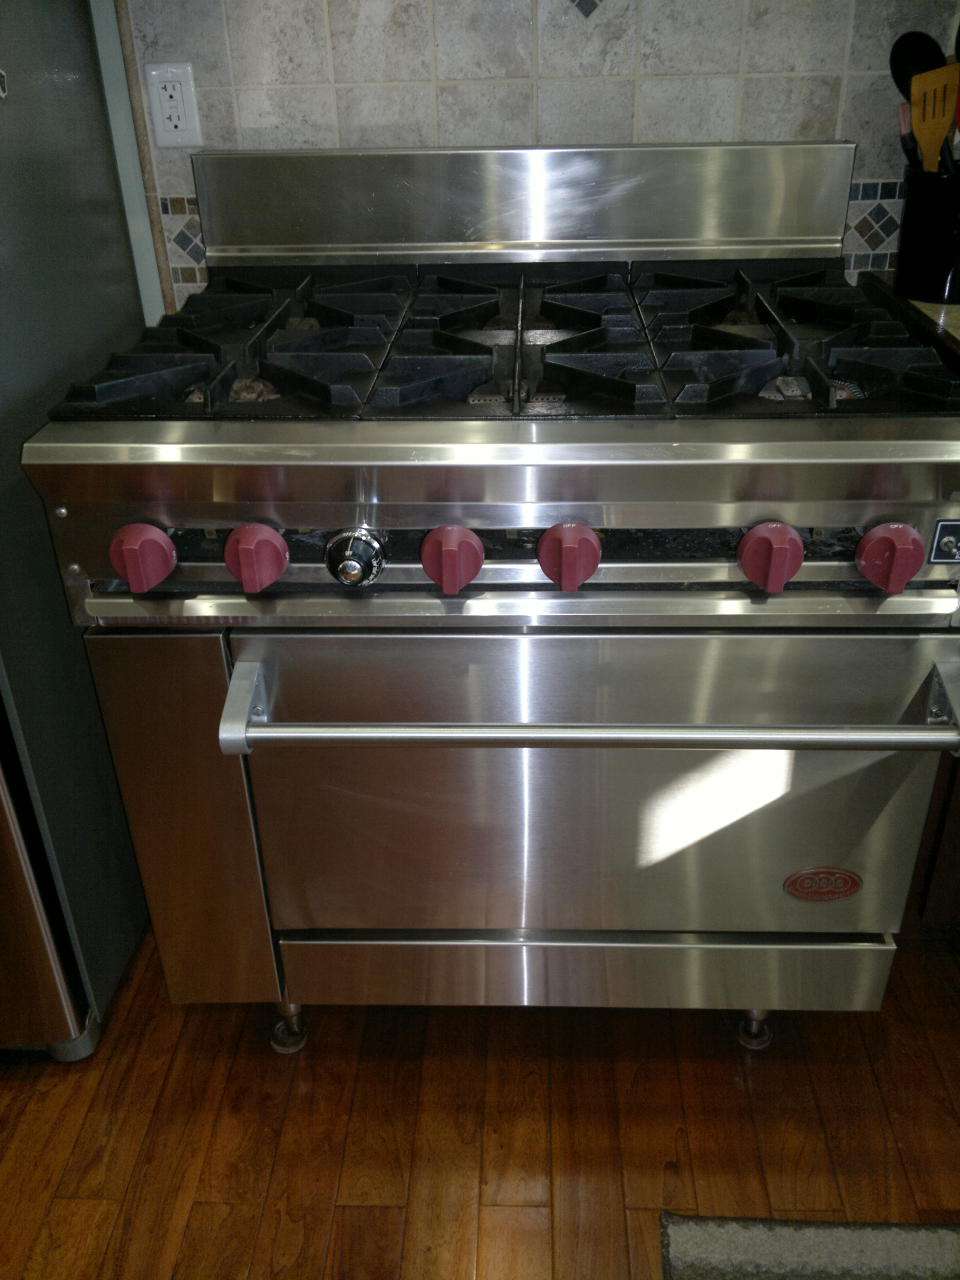 1. 6 burners, 1 each ~30 inch oven.